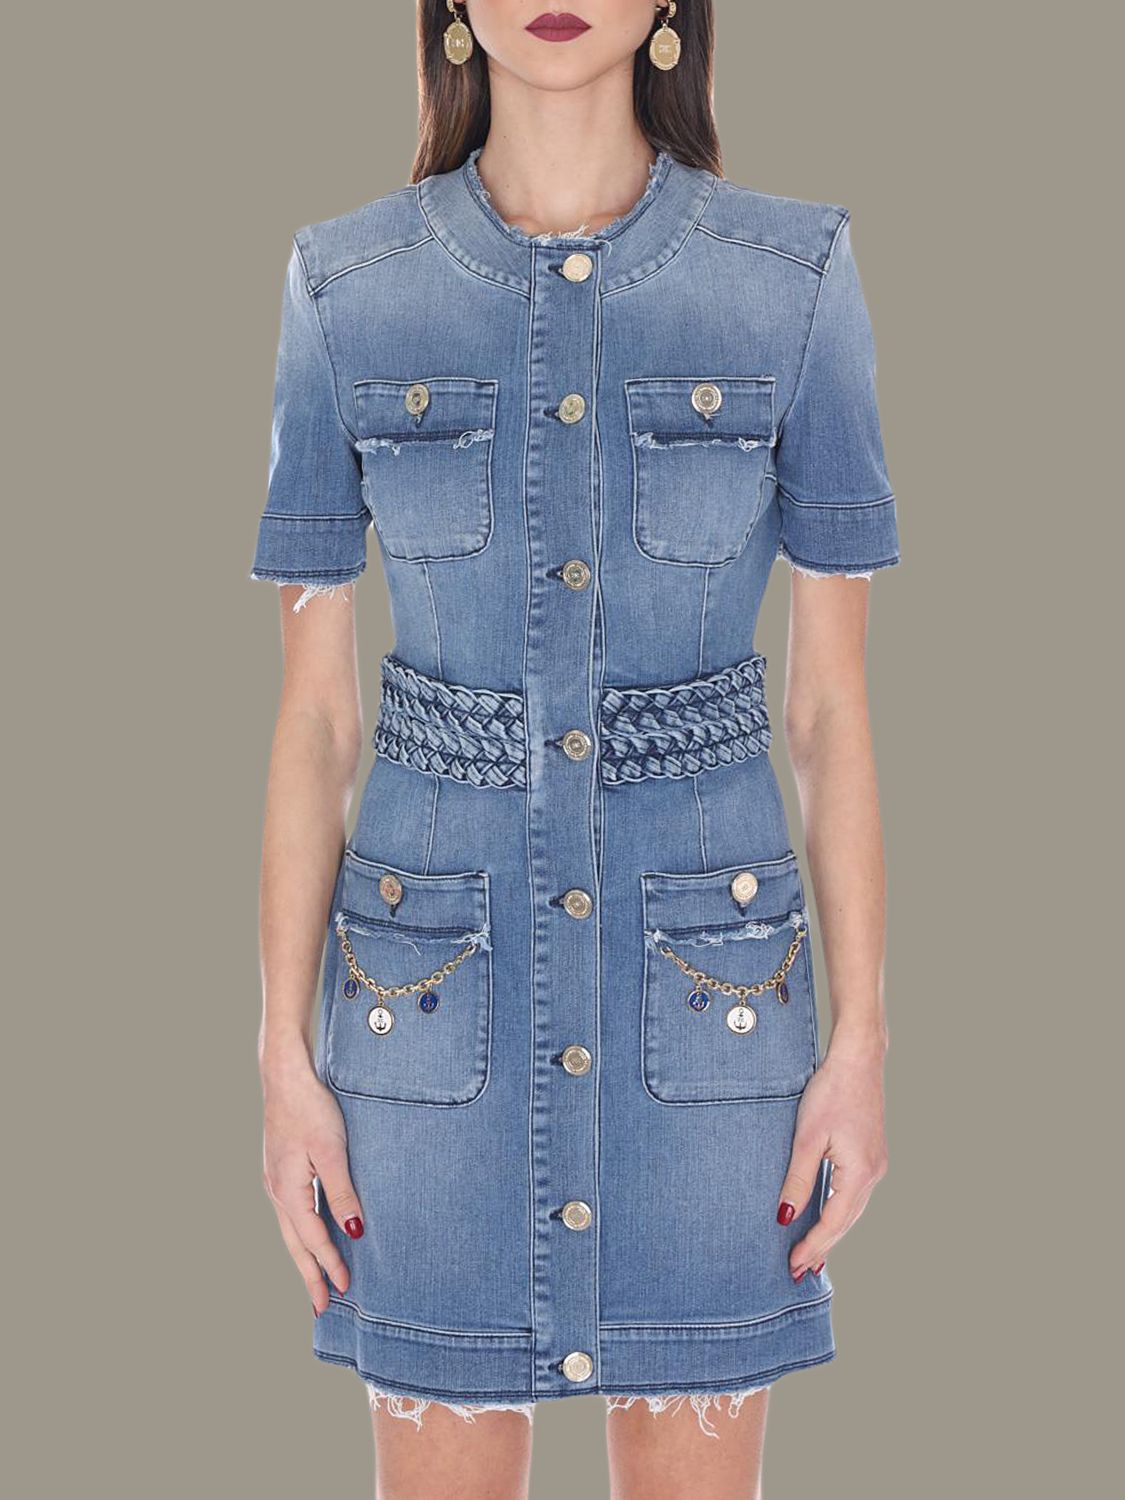 Elisabetta Franchi Outlet: denim dress with multi buttons | Dress ...